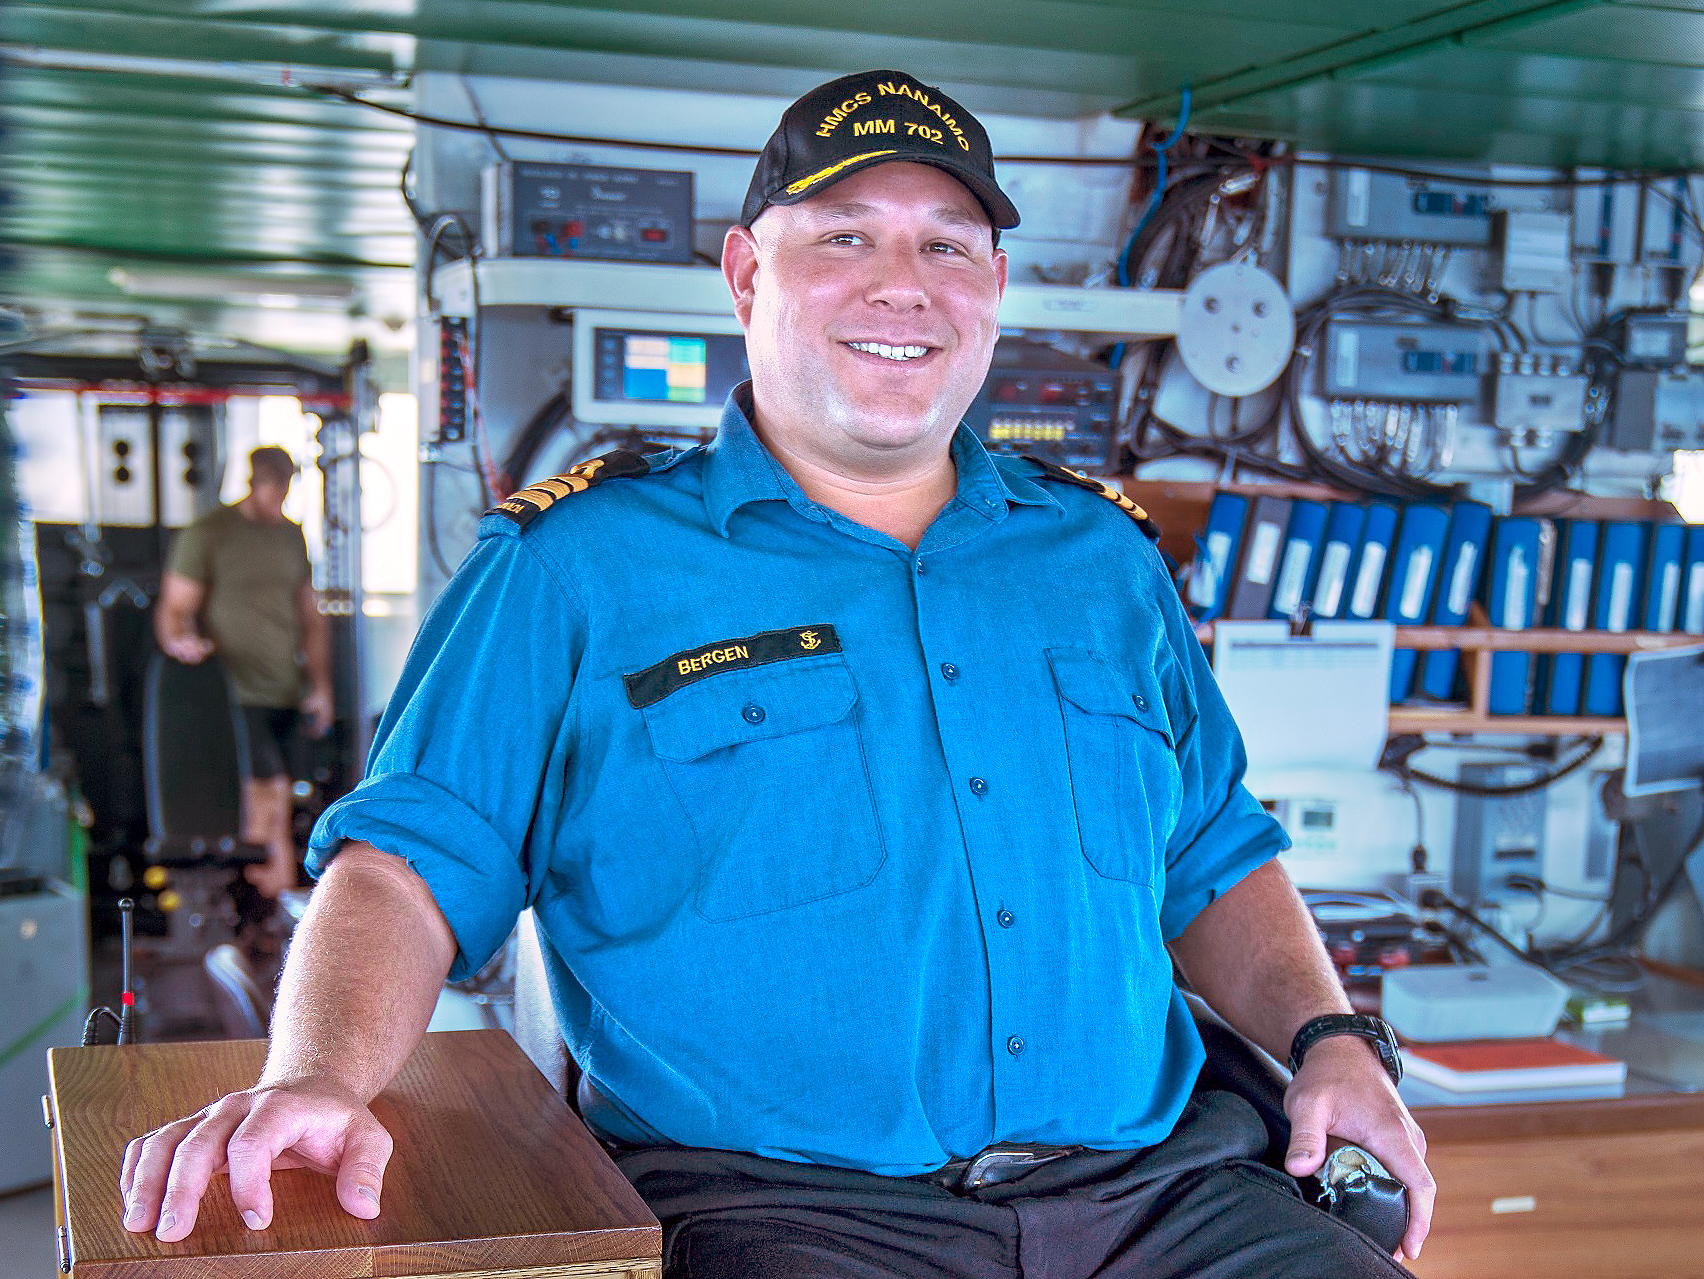 Commander Jason Bergen, Commanding Officer of HMCS Nanaimo. Photo by Patrick Fisher.